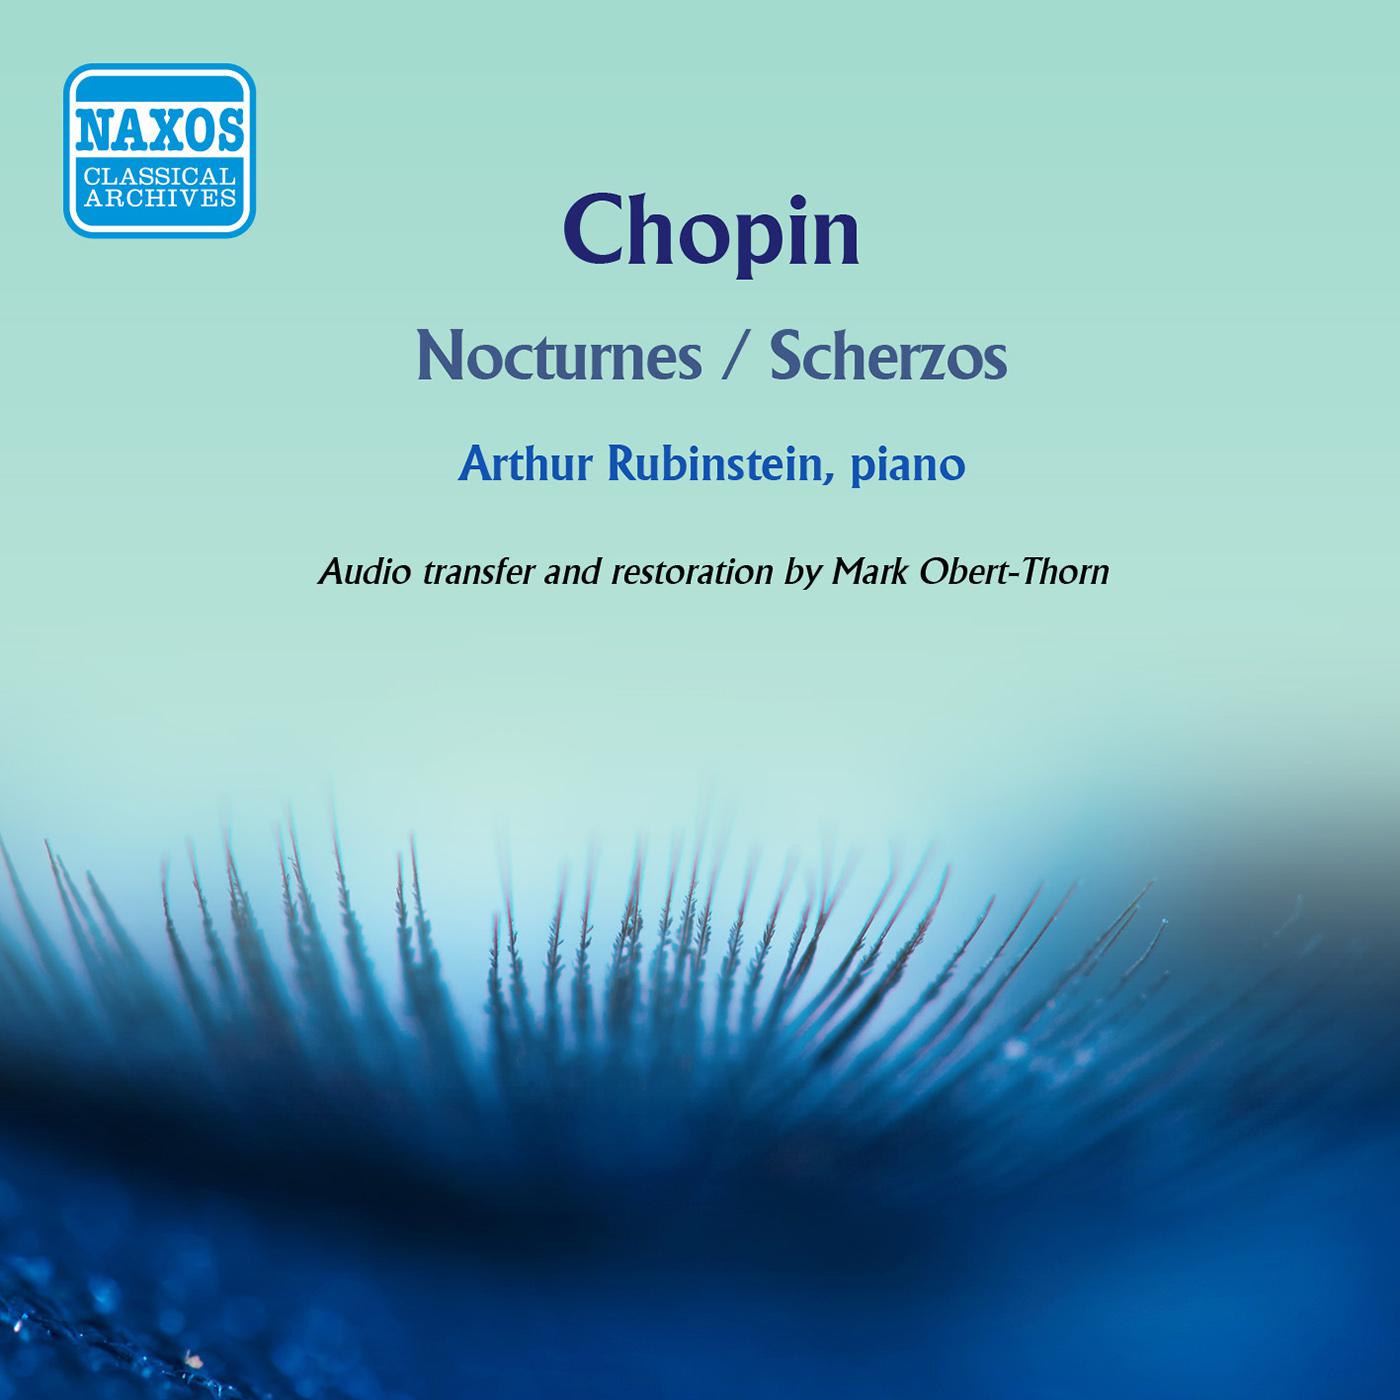 Nocturne No. 5 in F-Sharp Major, Op. 15, No. 2